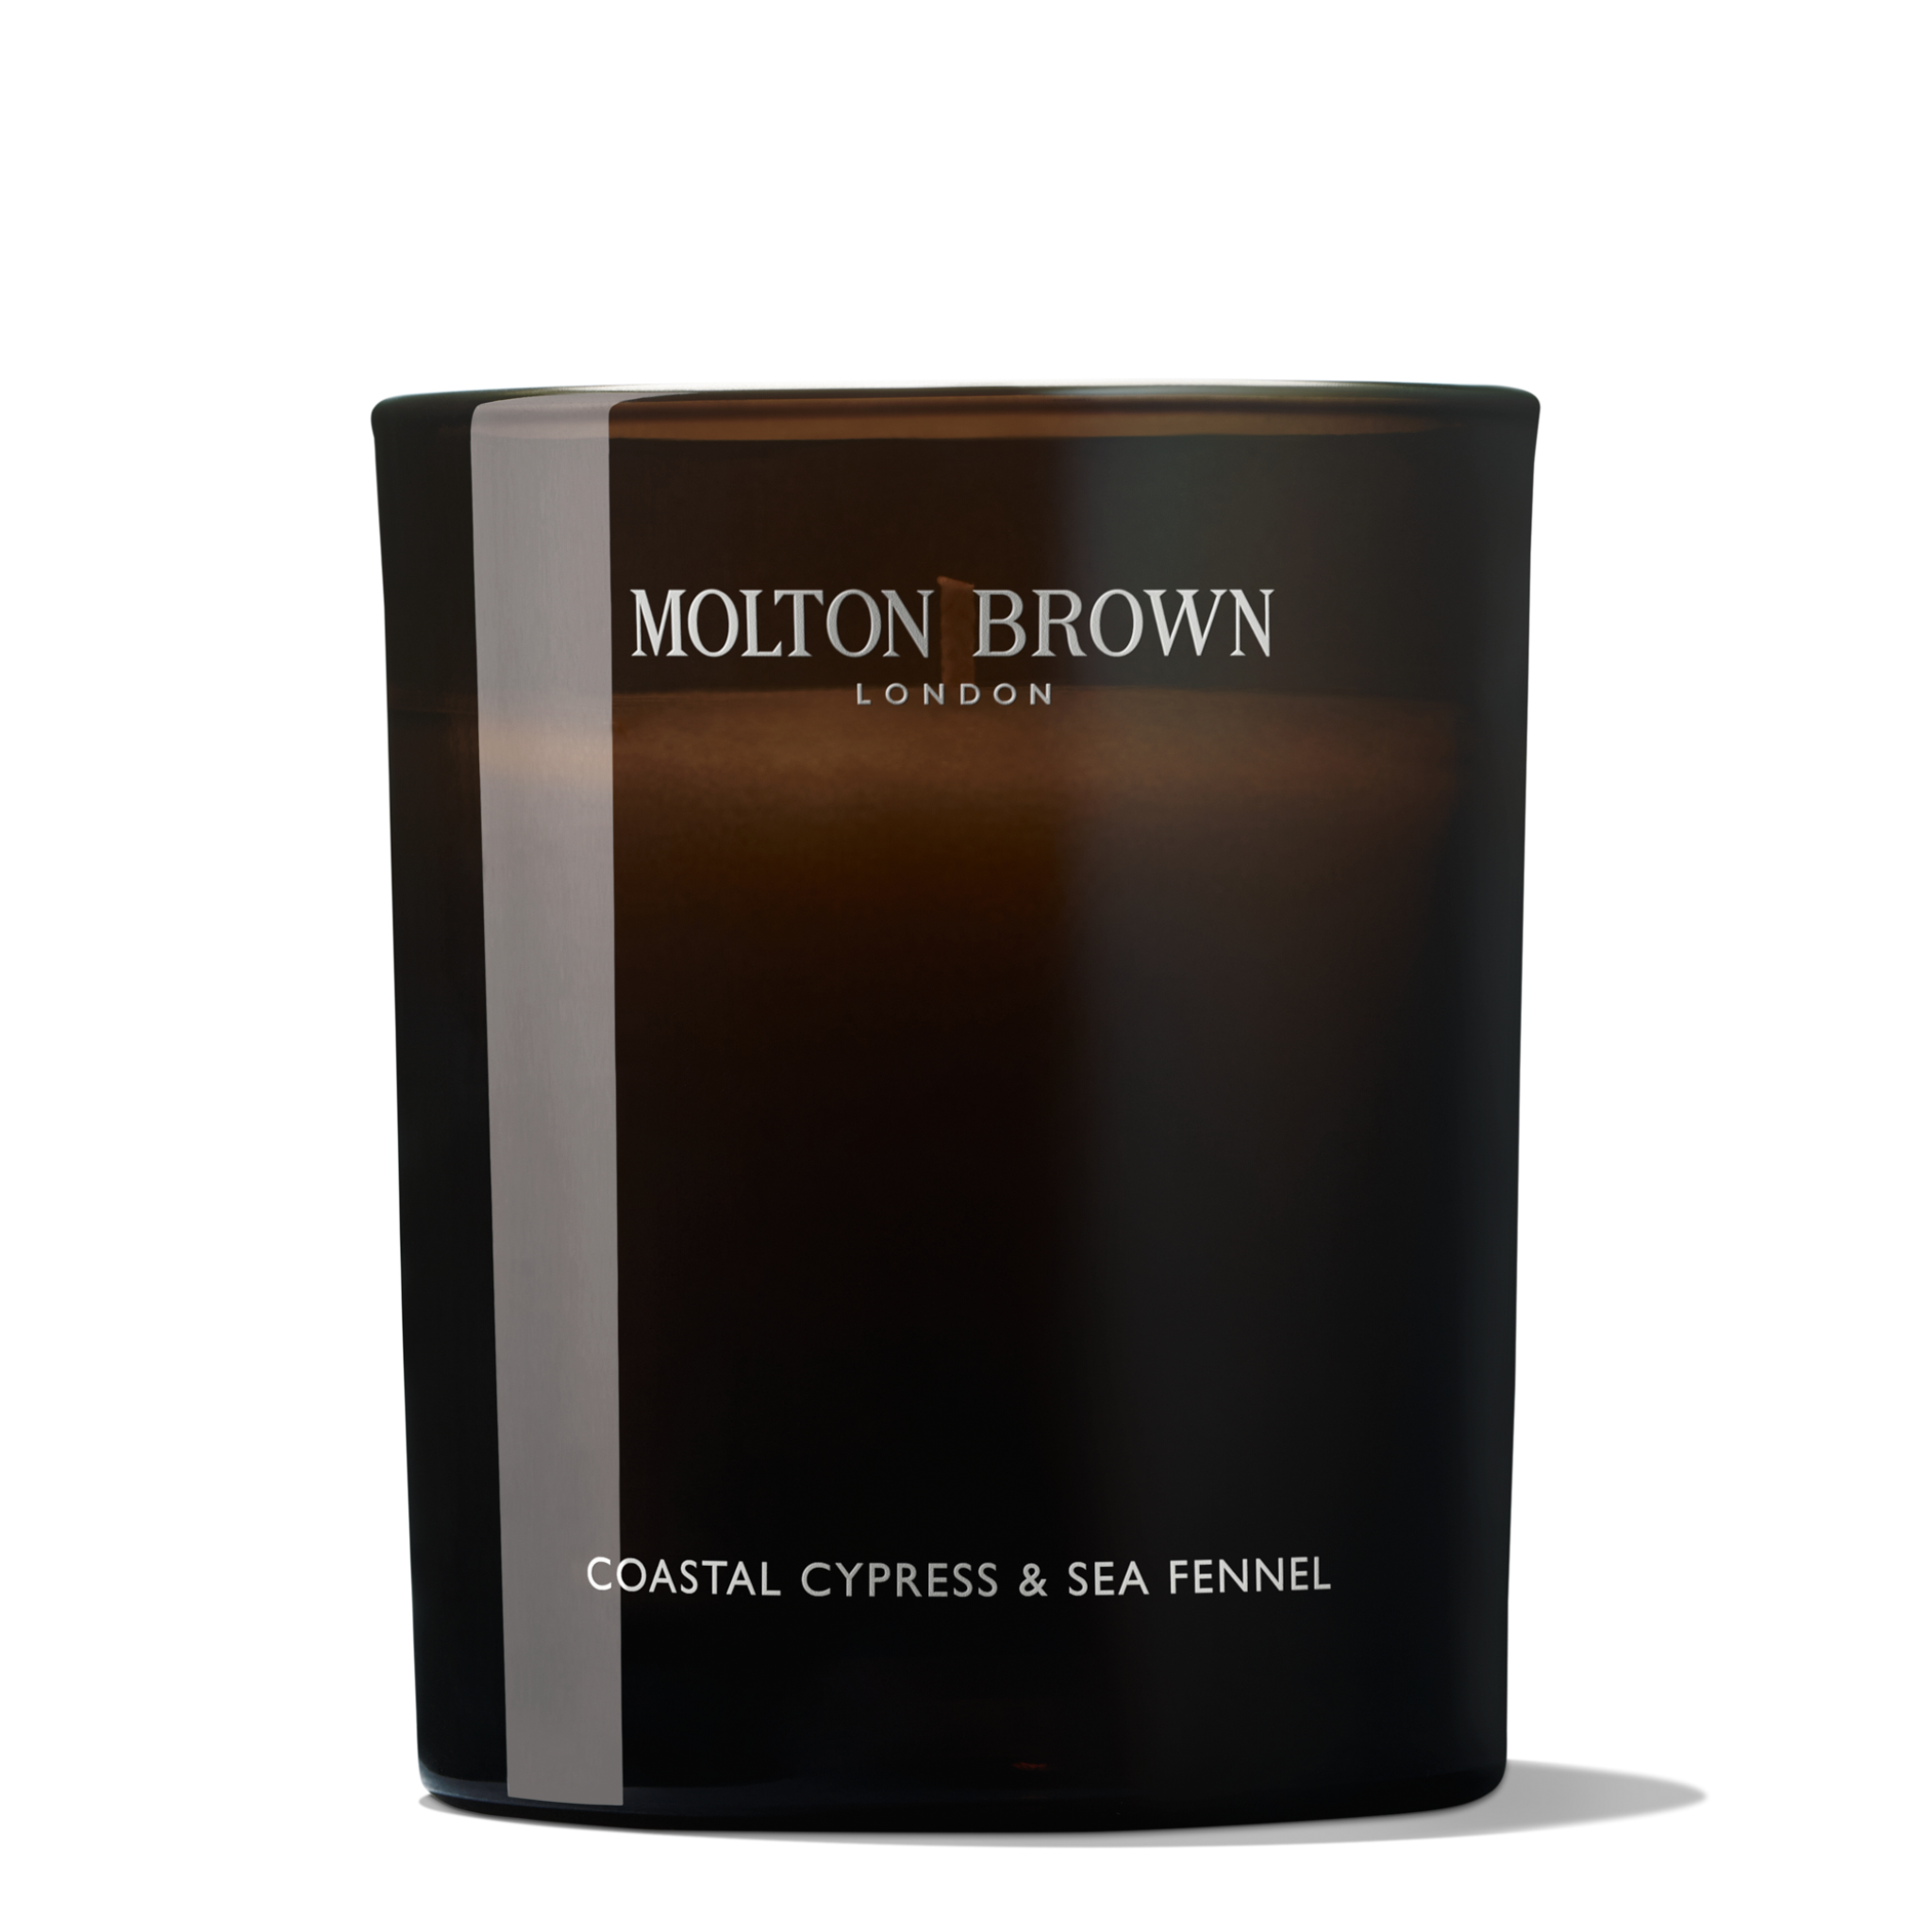 Molton Brown coastal cypress and sea fennel candle